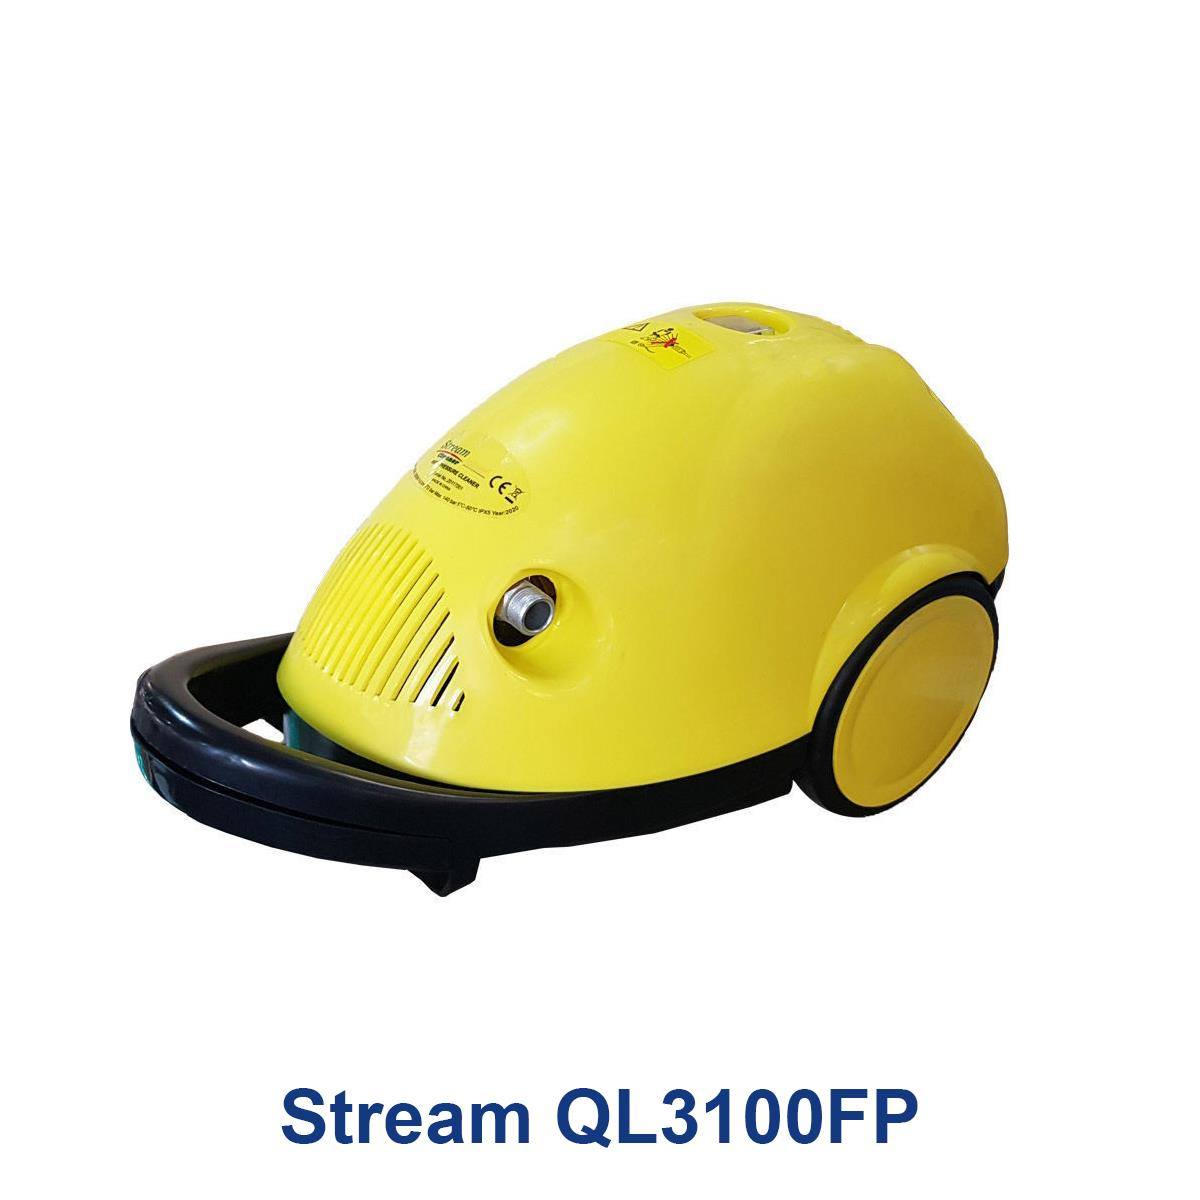 Stream-QL3100FP